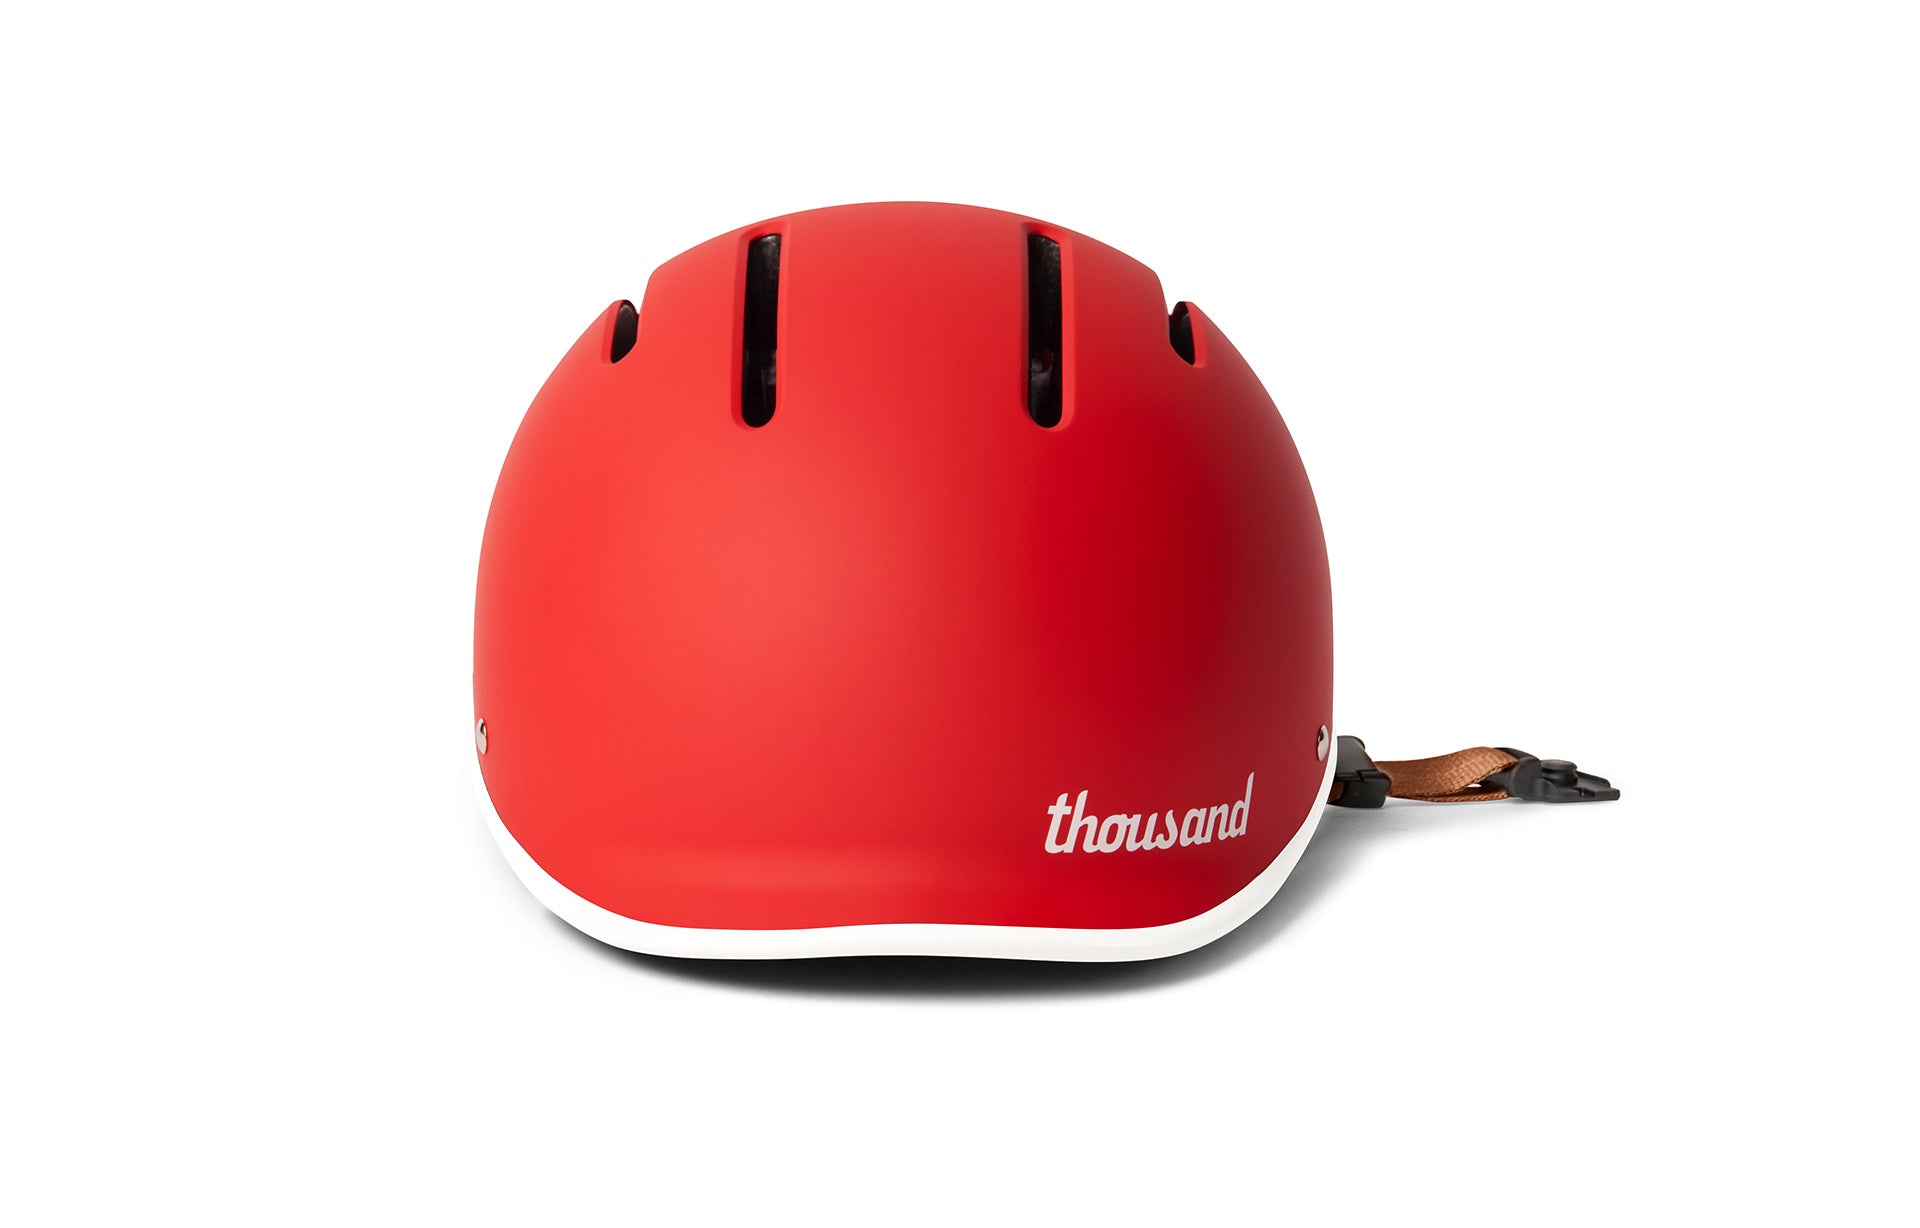 Thousand heritage junior helmet